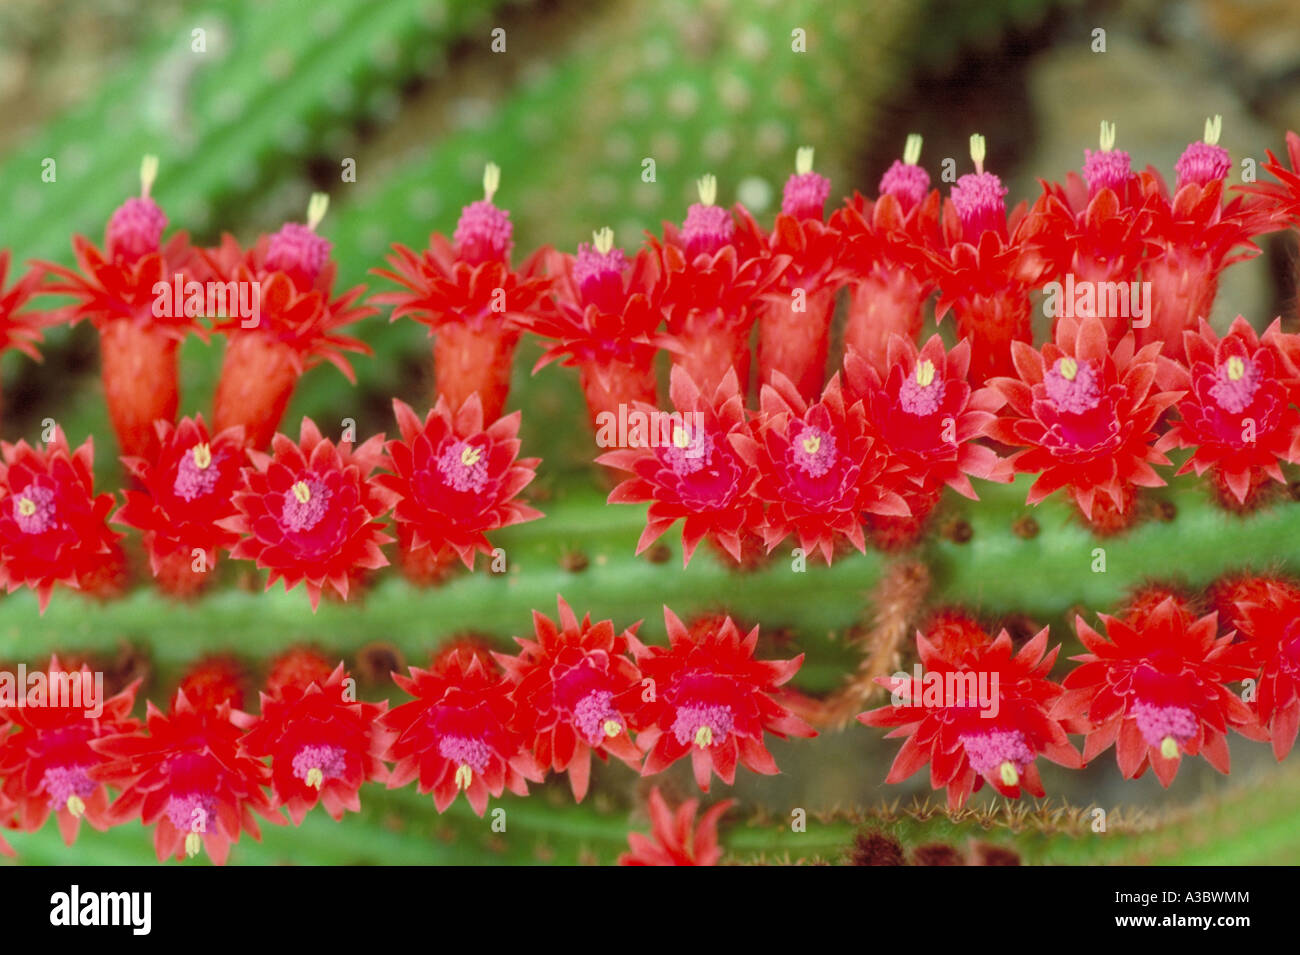 Cleistocactus samaipatanus (Syn. Borzicactus samaipatanus), Cactaceae. Bolivia, Peru, South America. Stock Photo